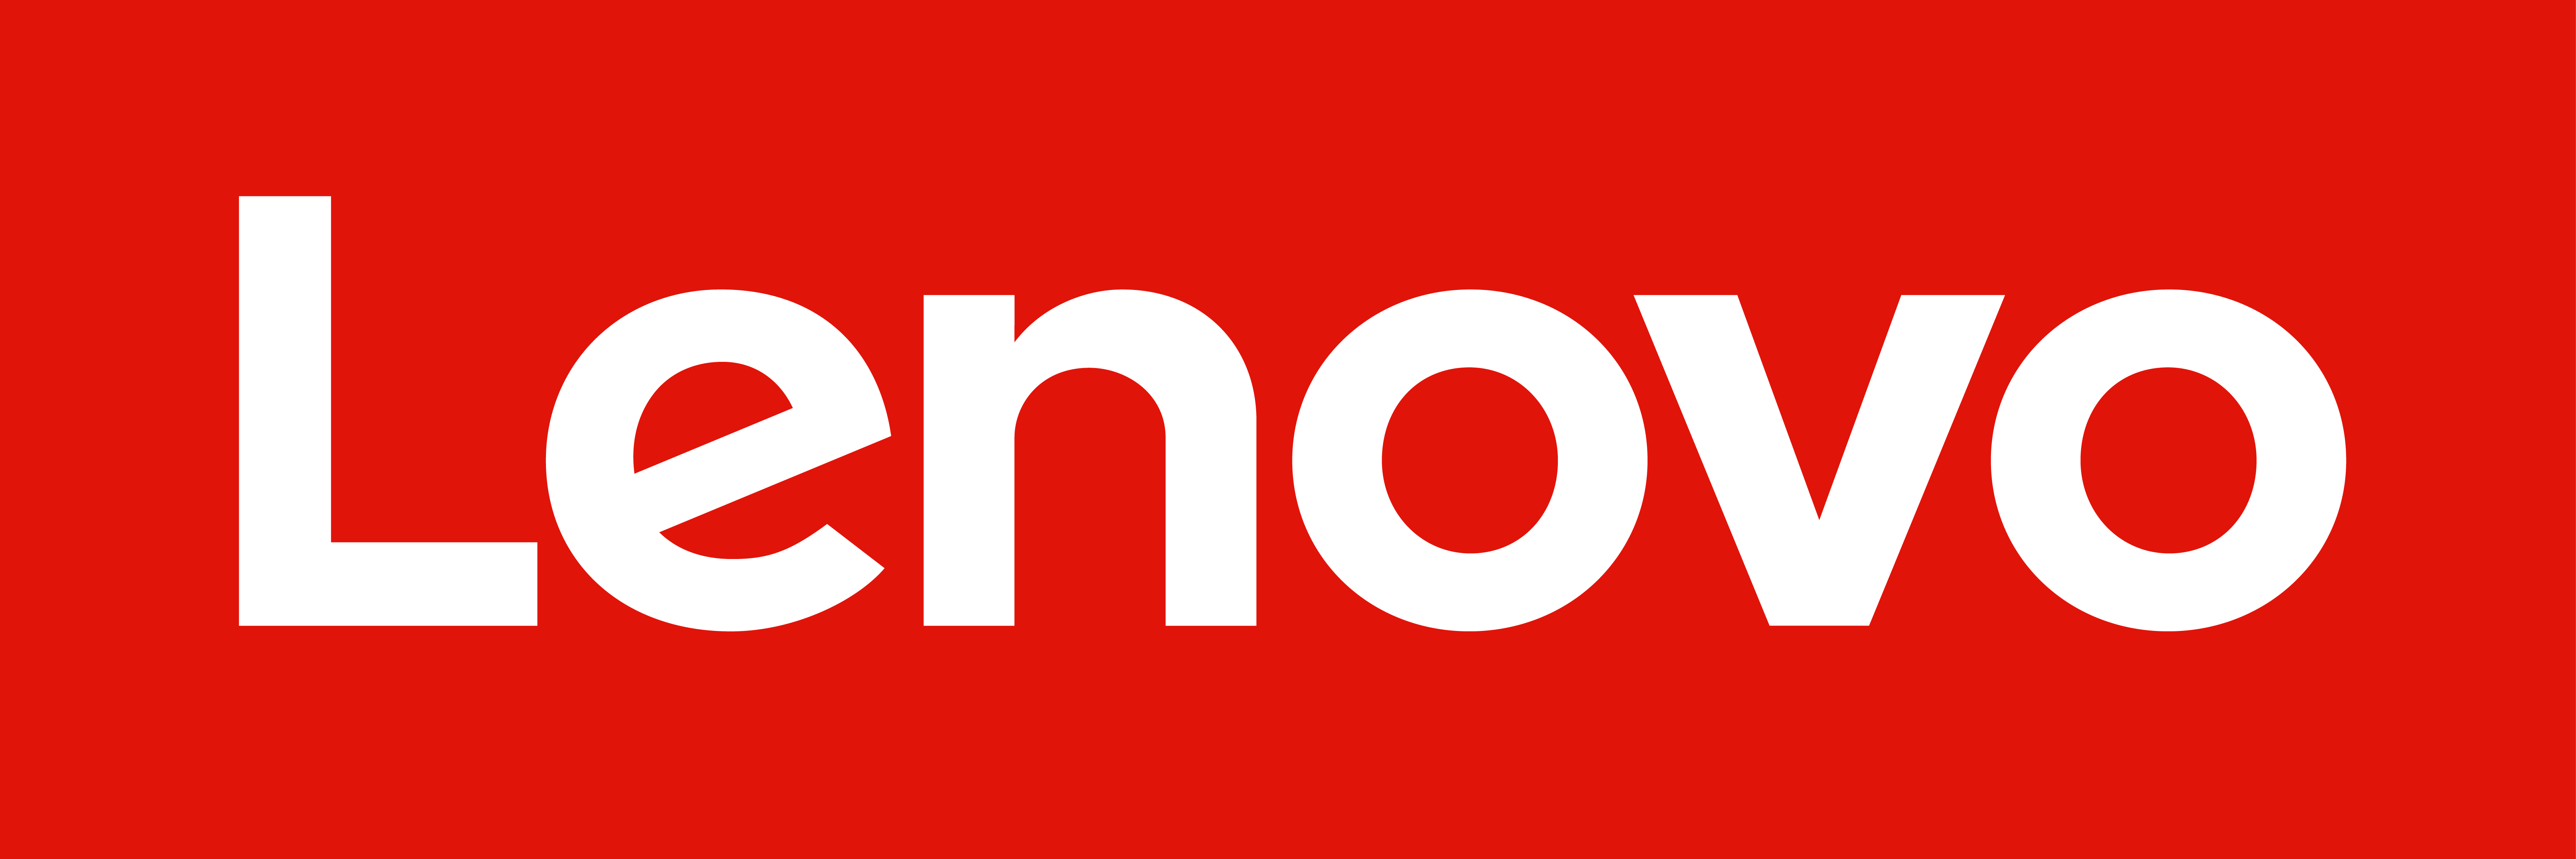 lenovo-logo.png